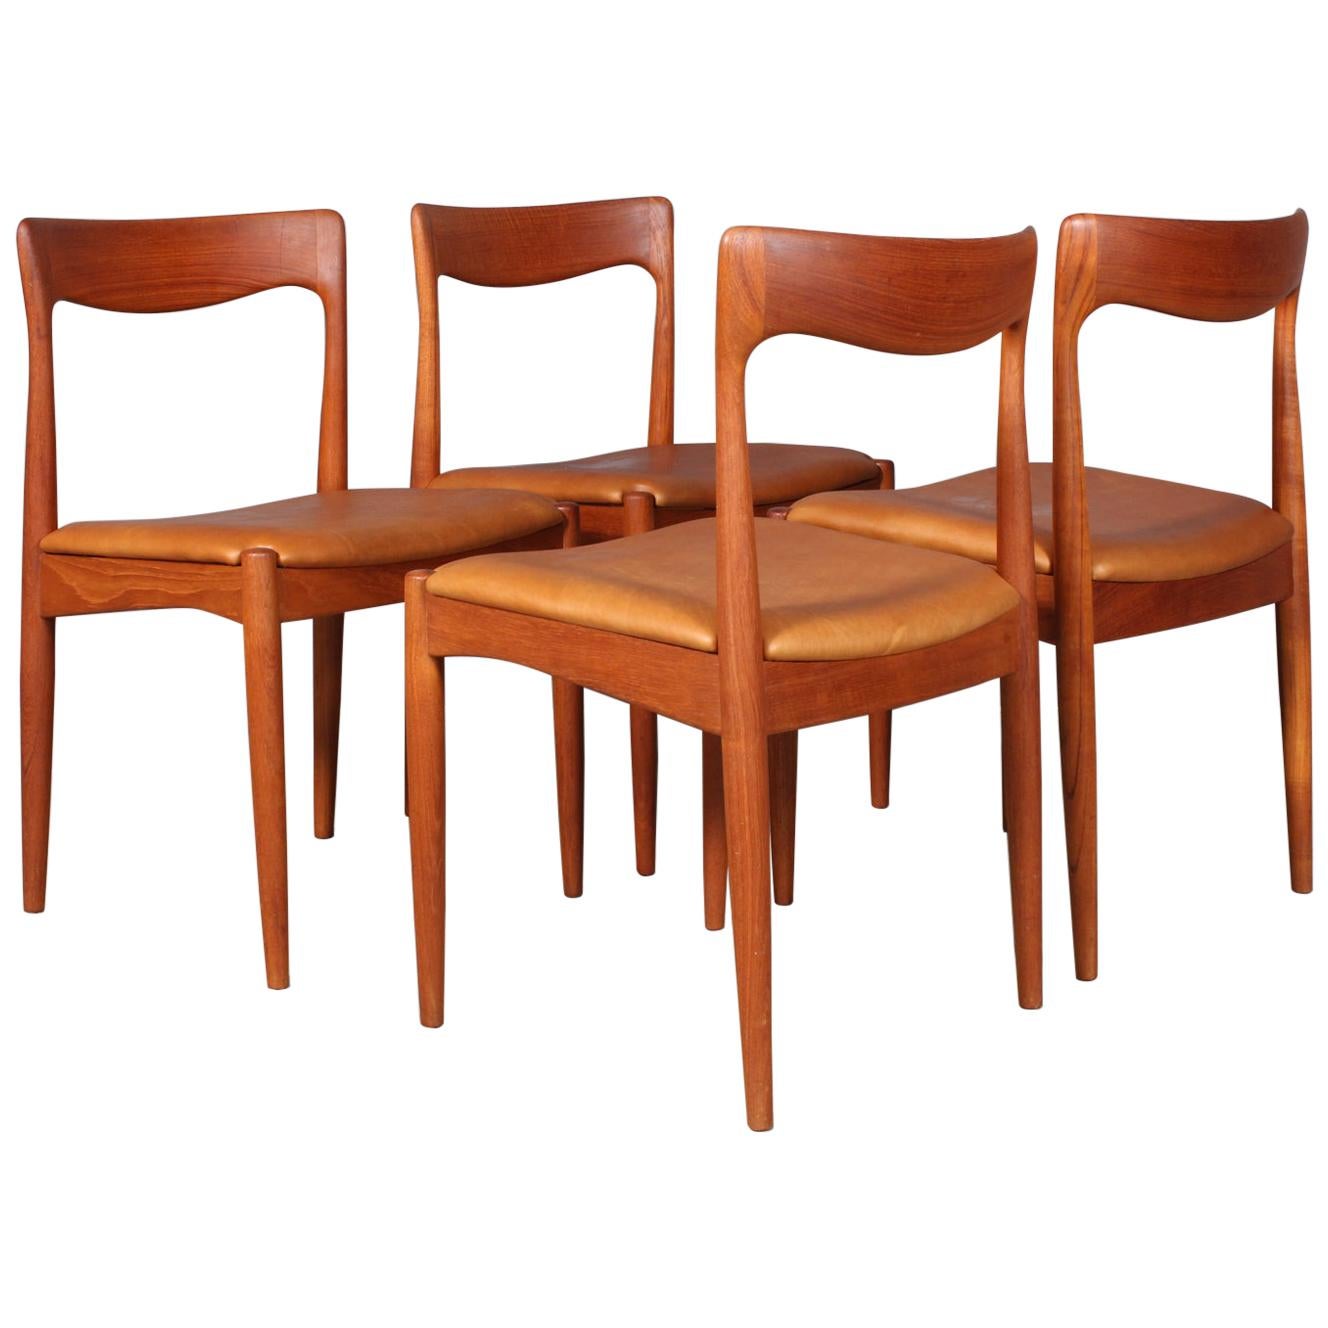 Four Arne Vodder Dining Chairs, Solid Teak